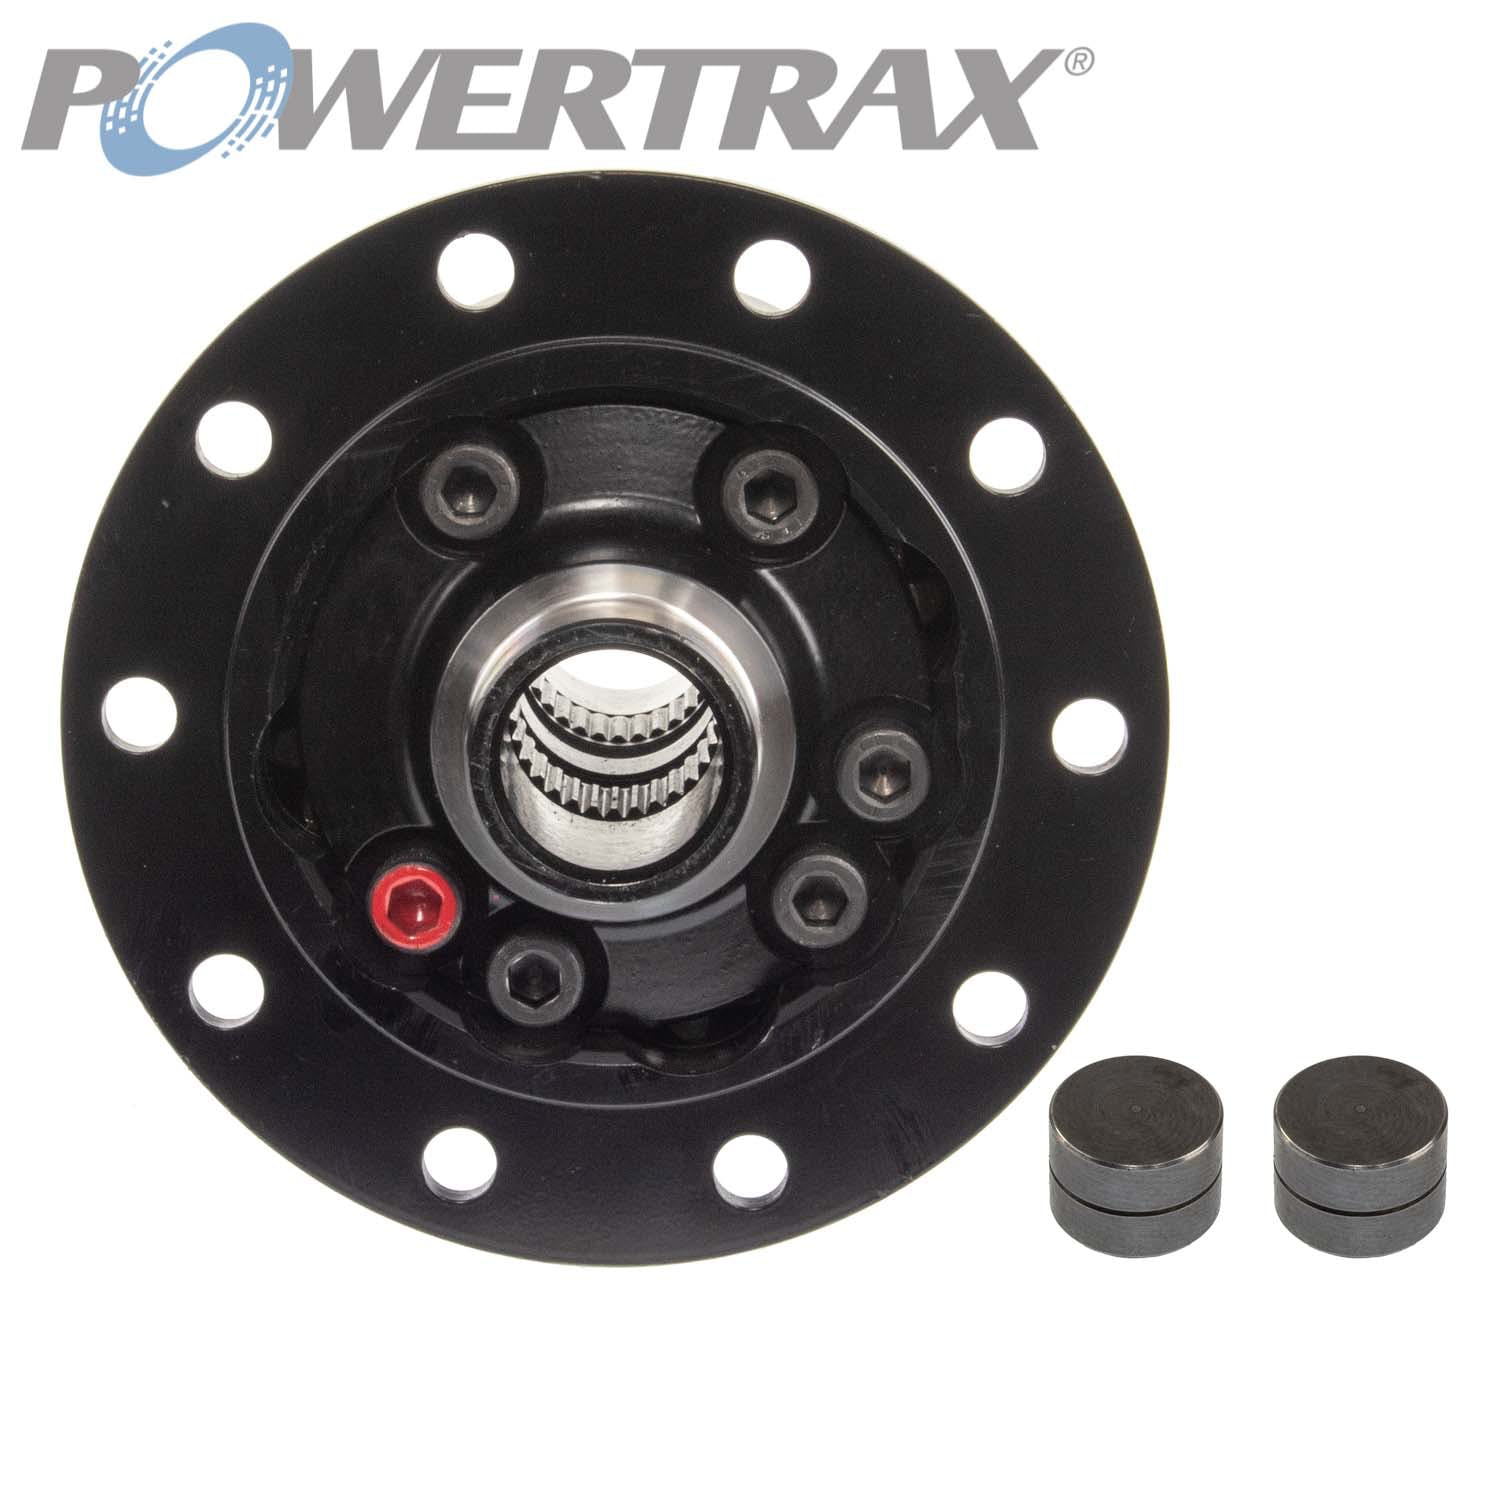 PowerTrax GT209533 Powertrax - Grip PRO Traction System